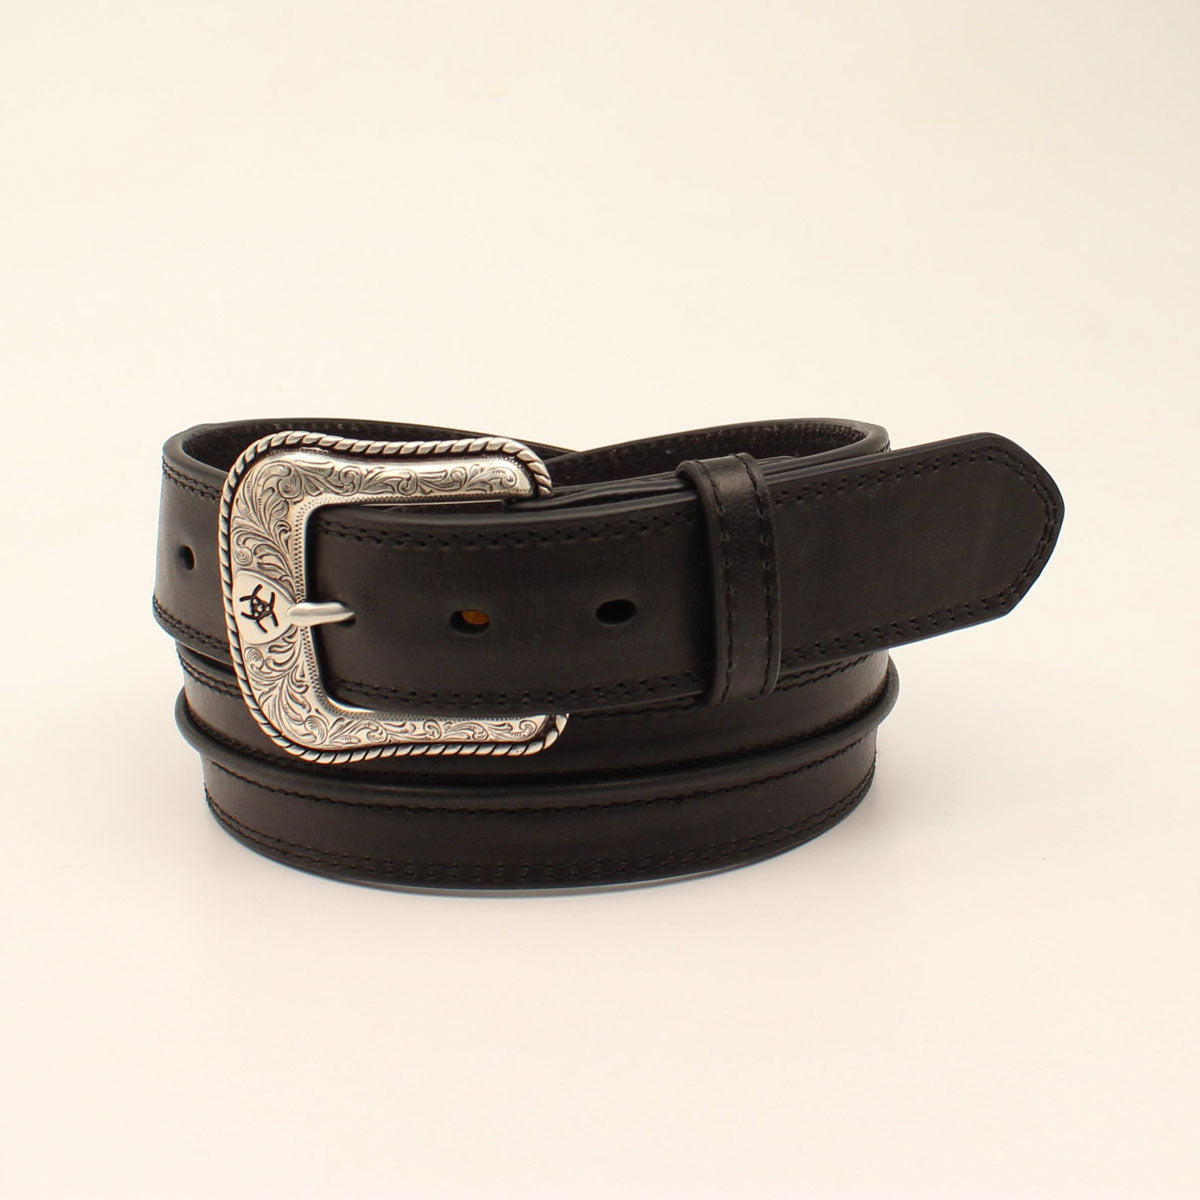 Ariat Men's Black Leather Belt